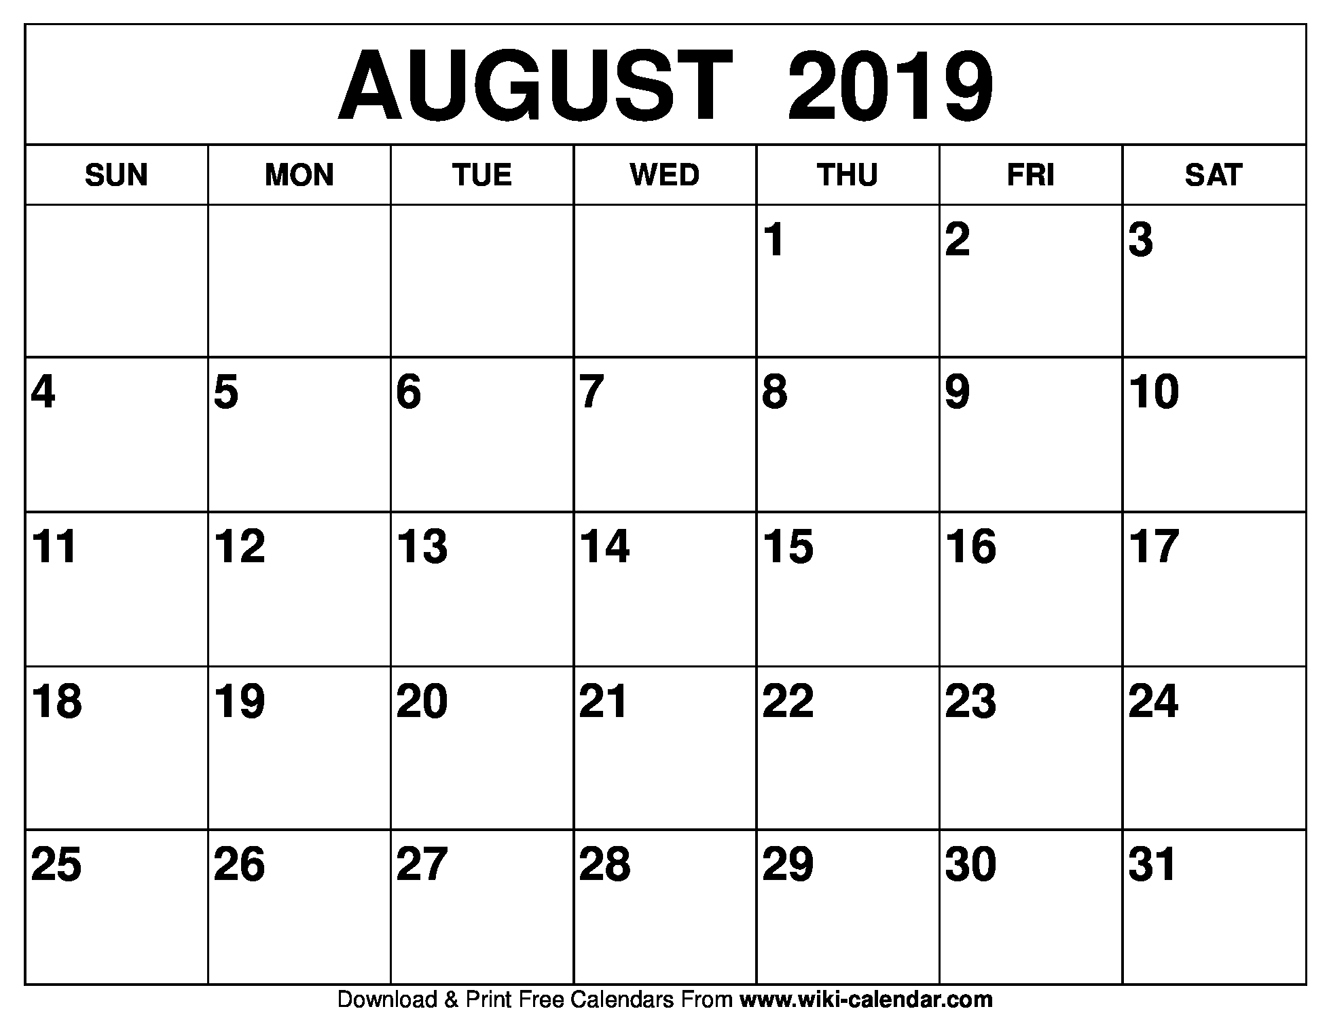 Take August 19 Calender